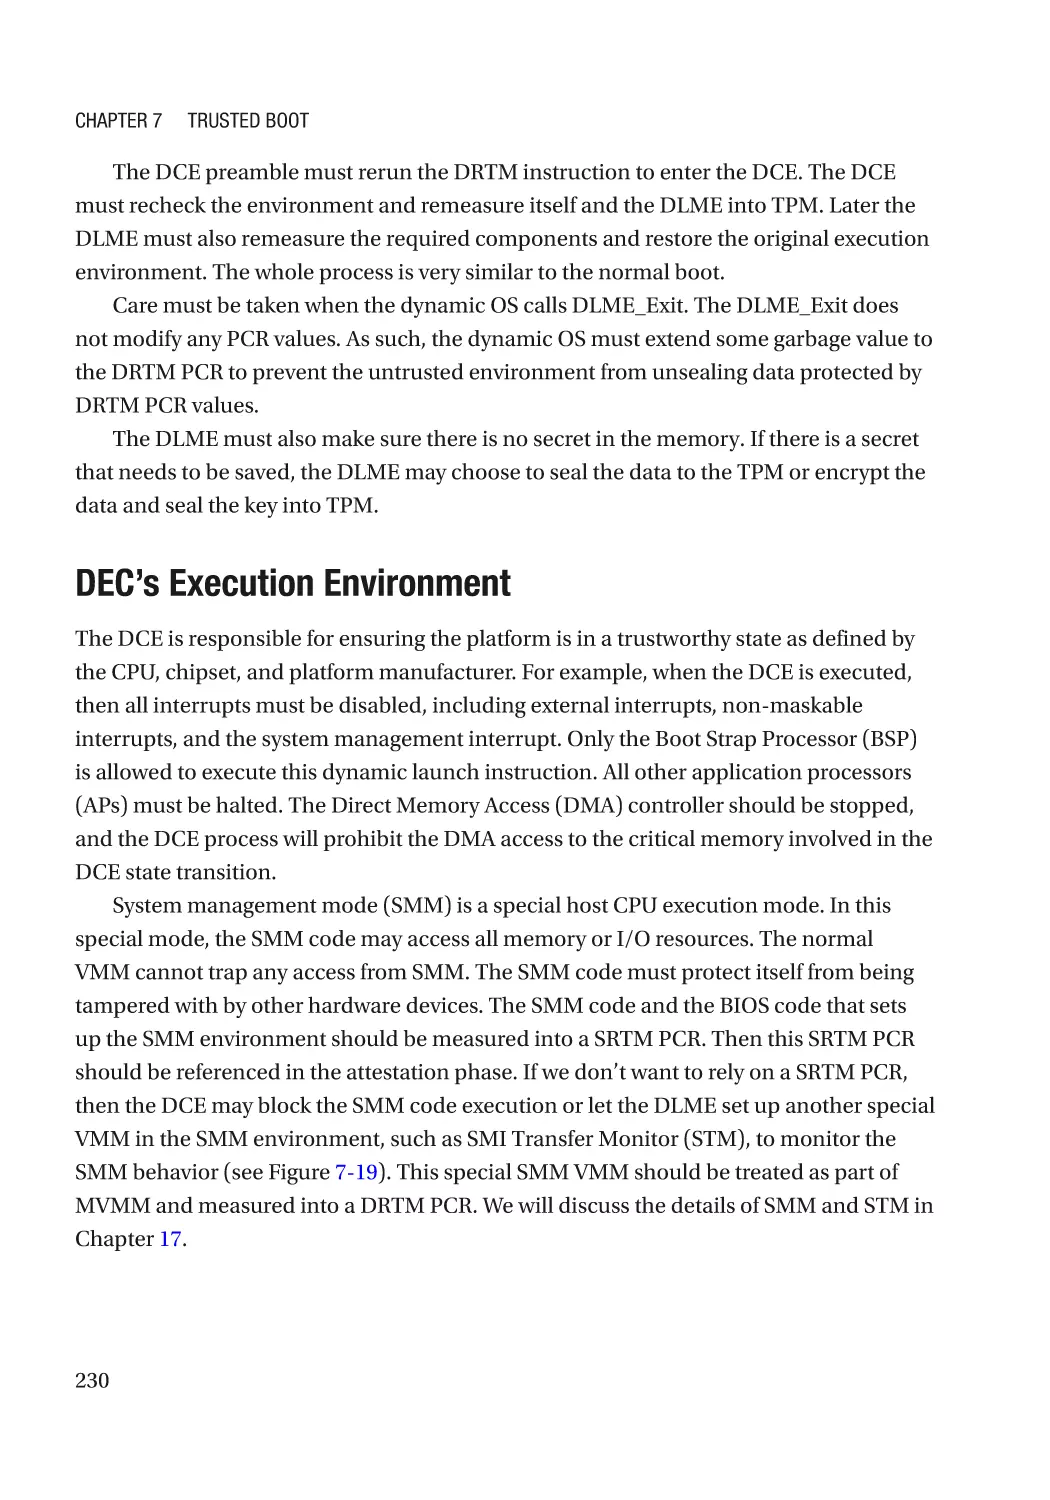 DEC’s Execution Environment